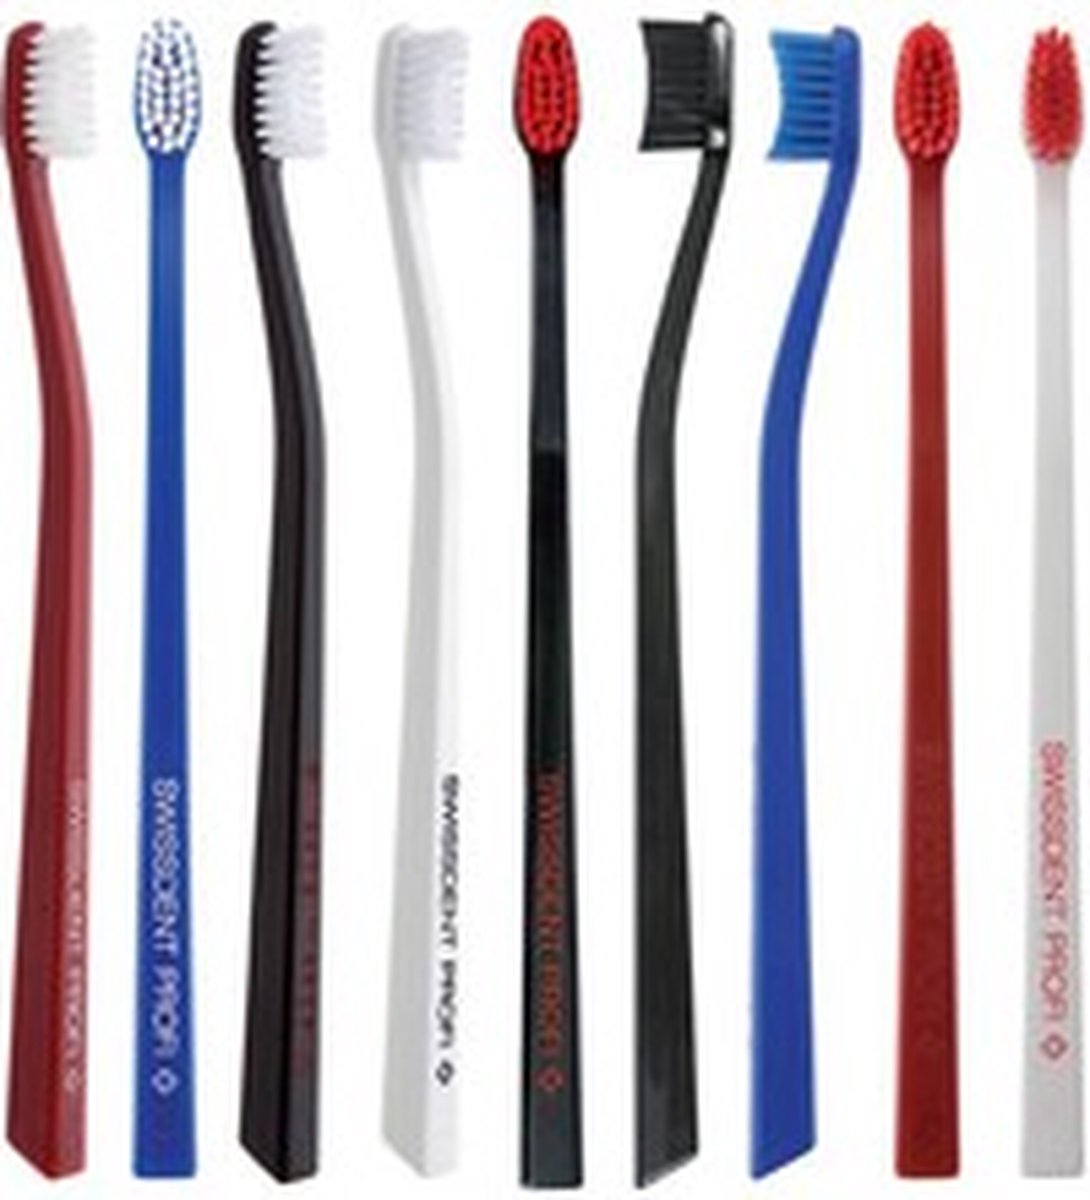 Profi Colours Soft-medium - Toothbrush